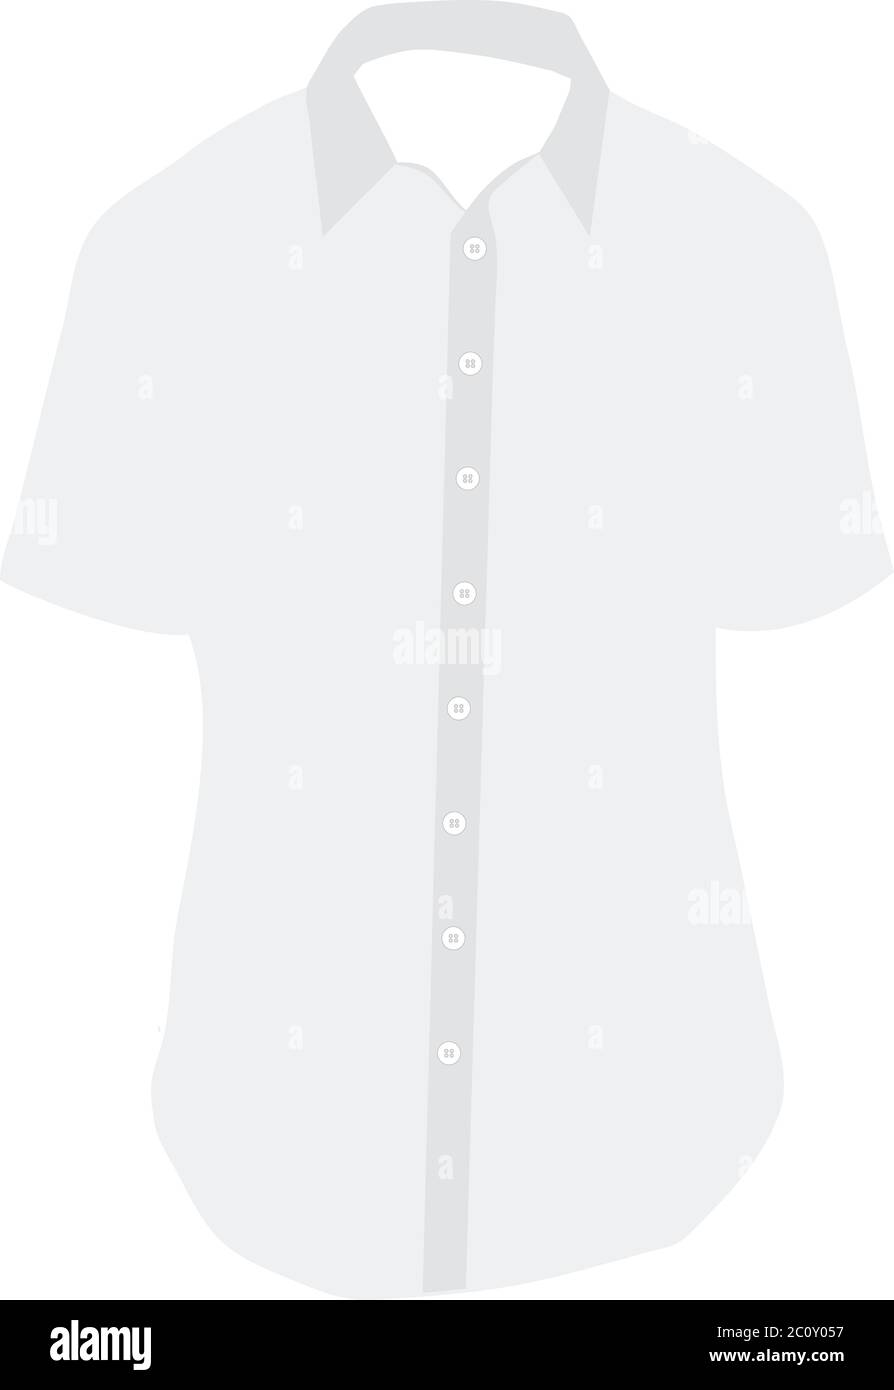 Illustration White Short Sleeve Button Up Dress Shirt Stock Photo